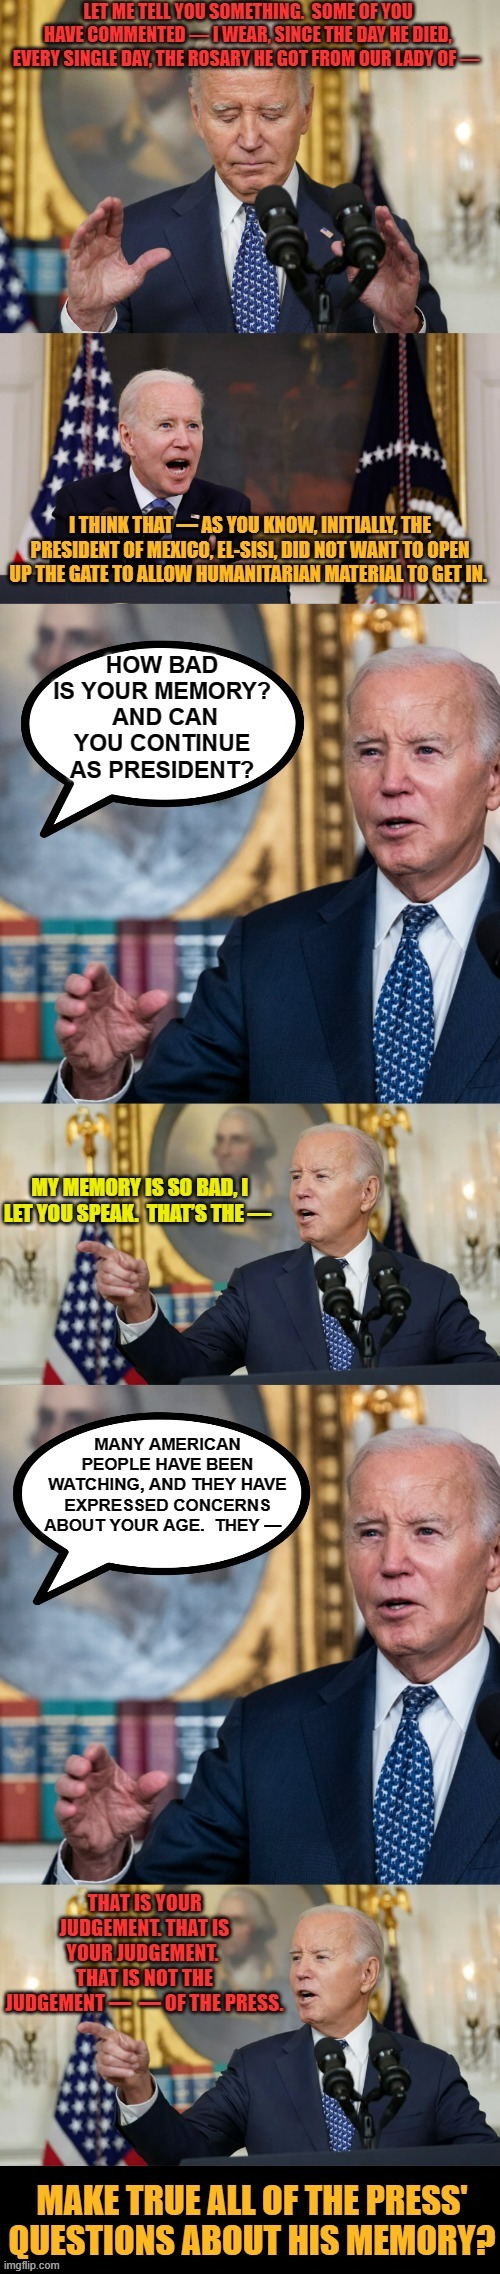 But Didn't Joe Biden's Actions | image tagged in memes,politics,joe biden,made,bad memory,points | made w/ Imgflip meme maker